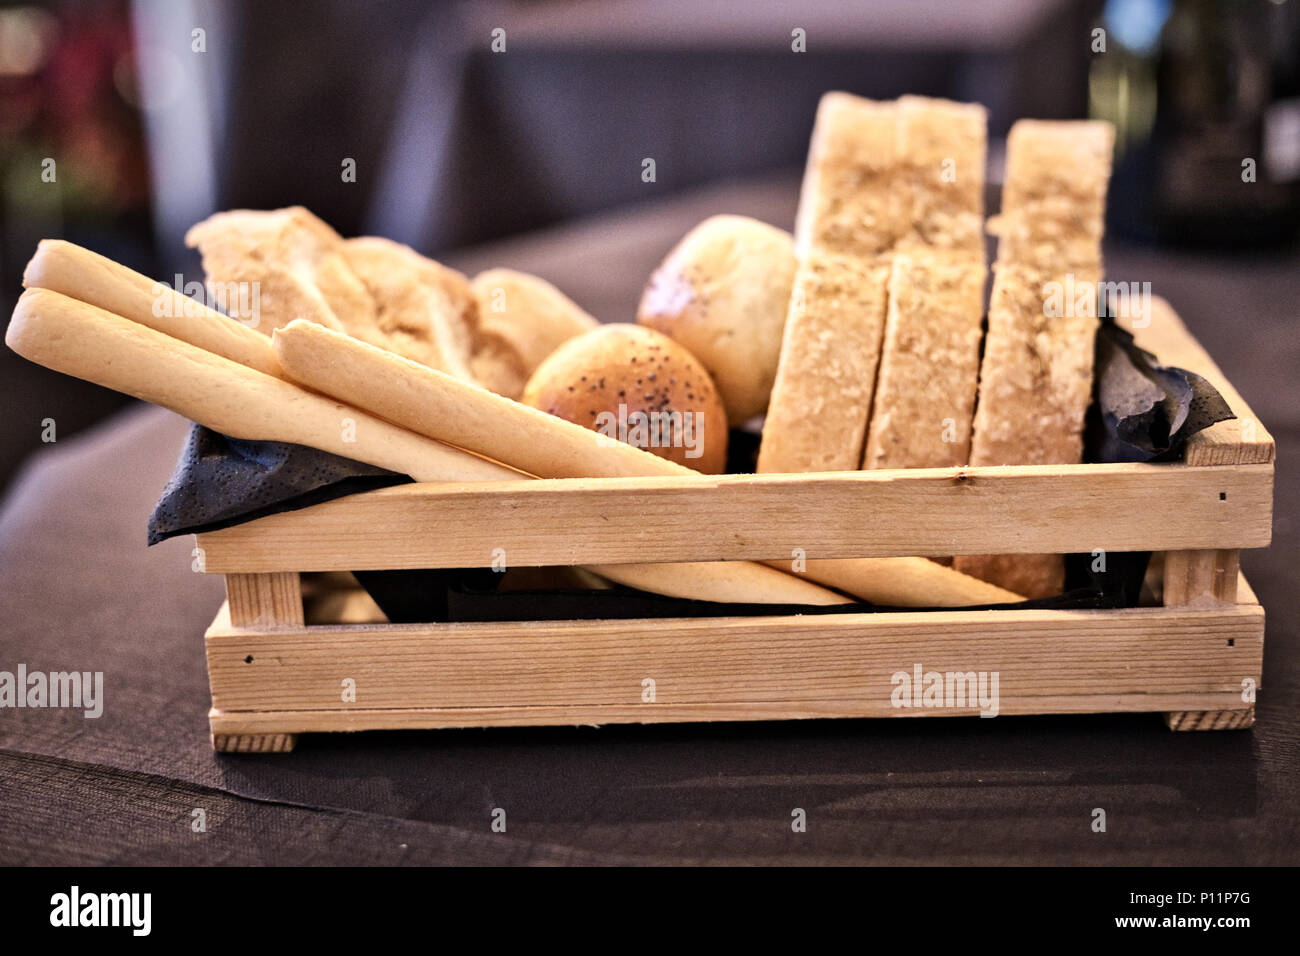 Bread Basket on Restaurant table Stock Photo - Alamy